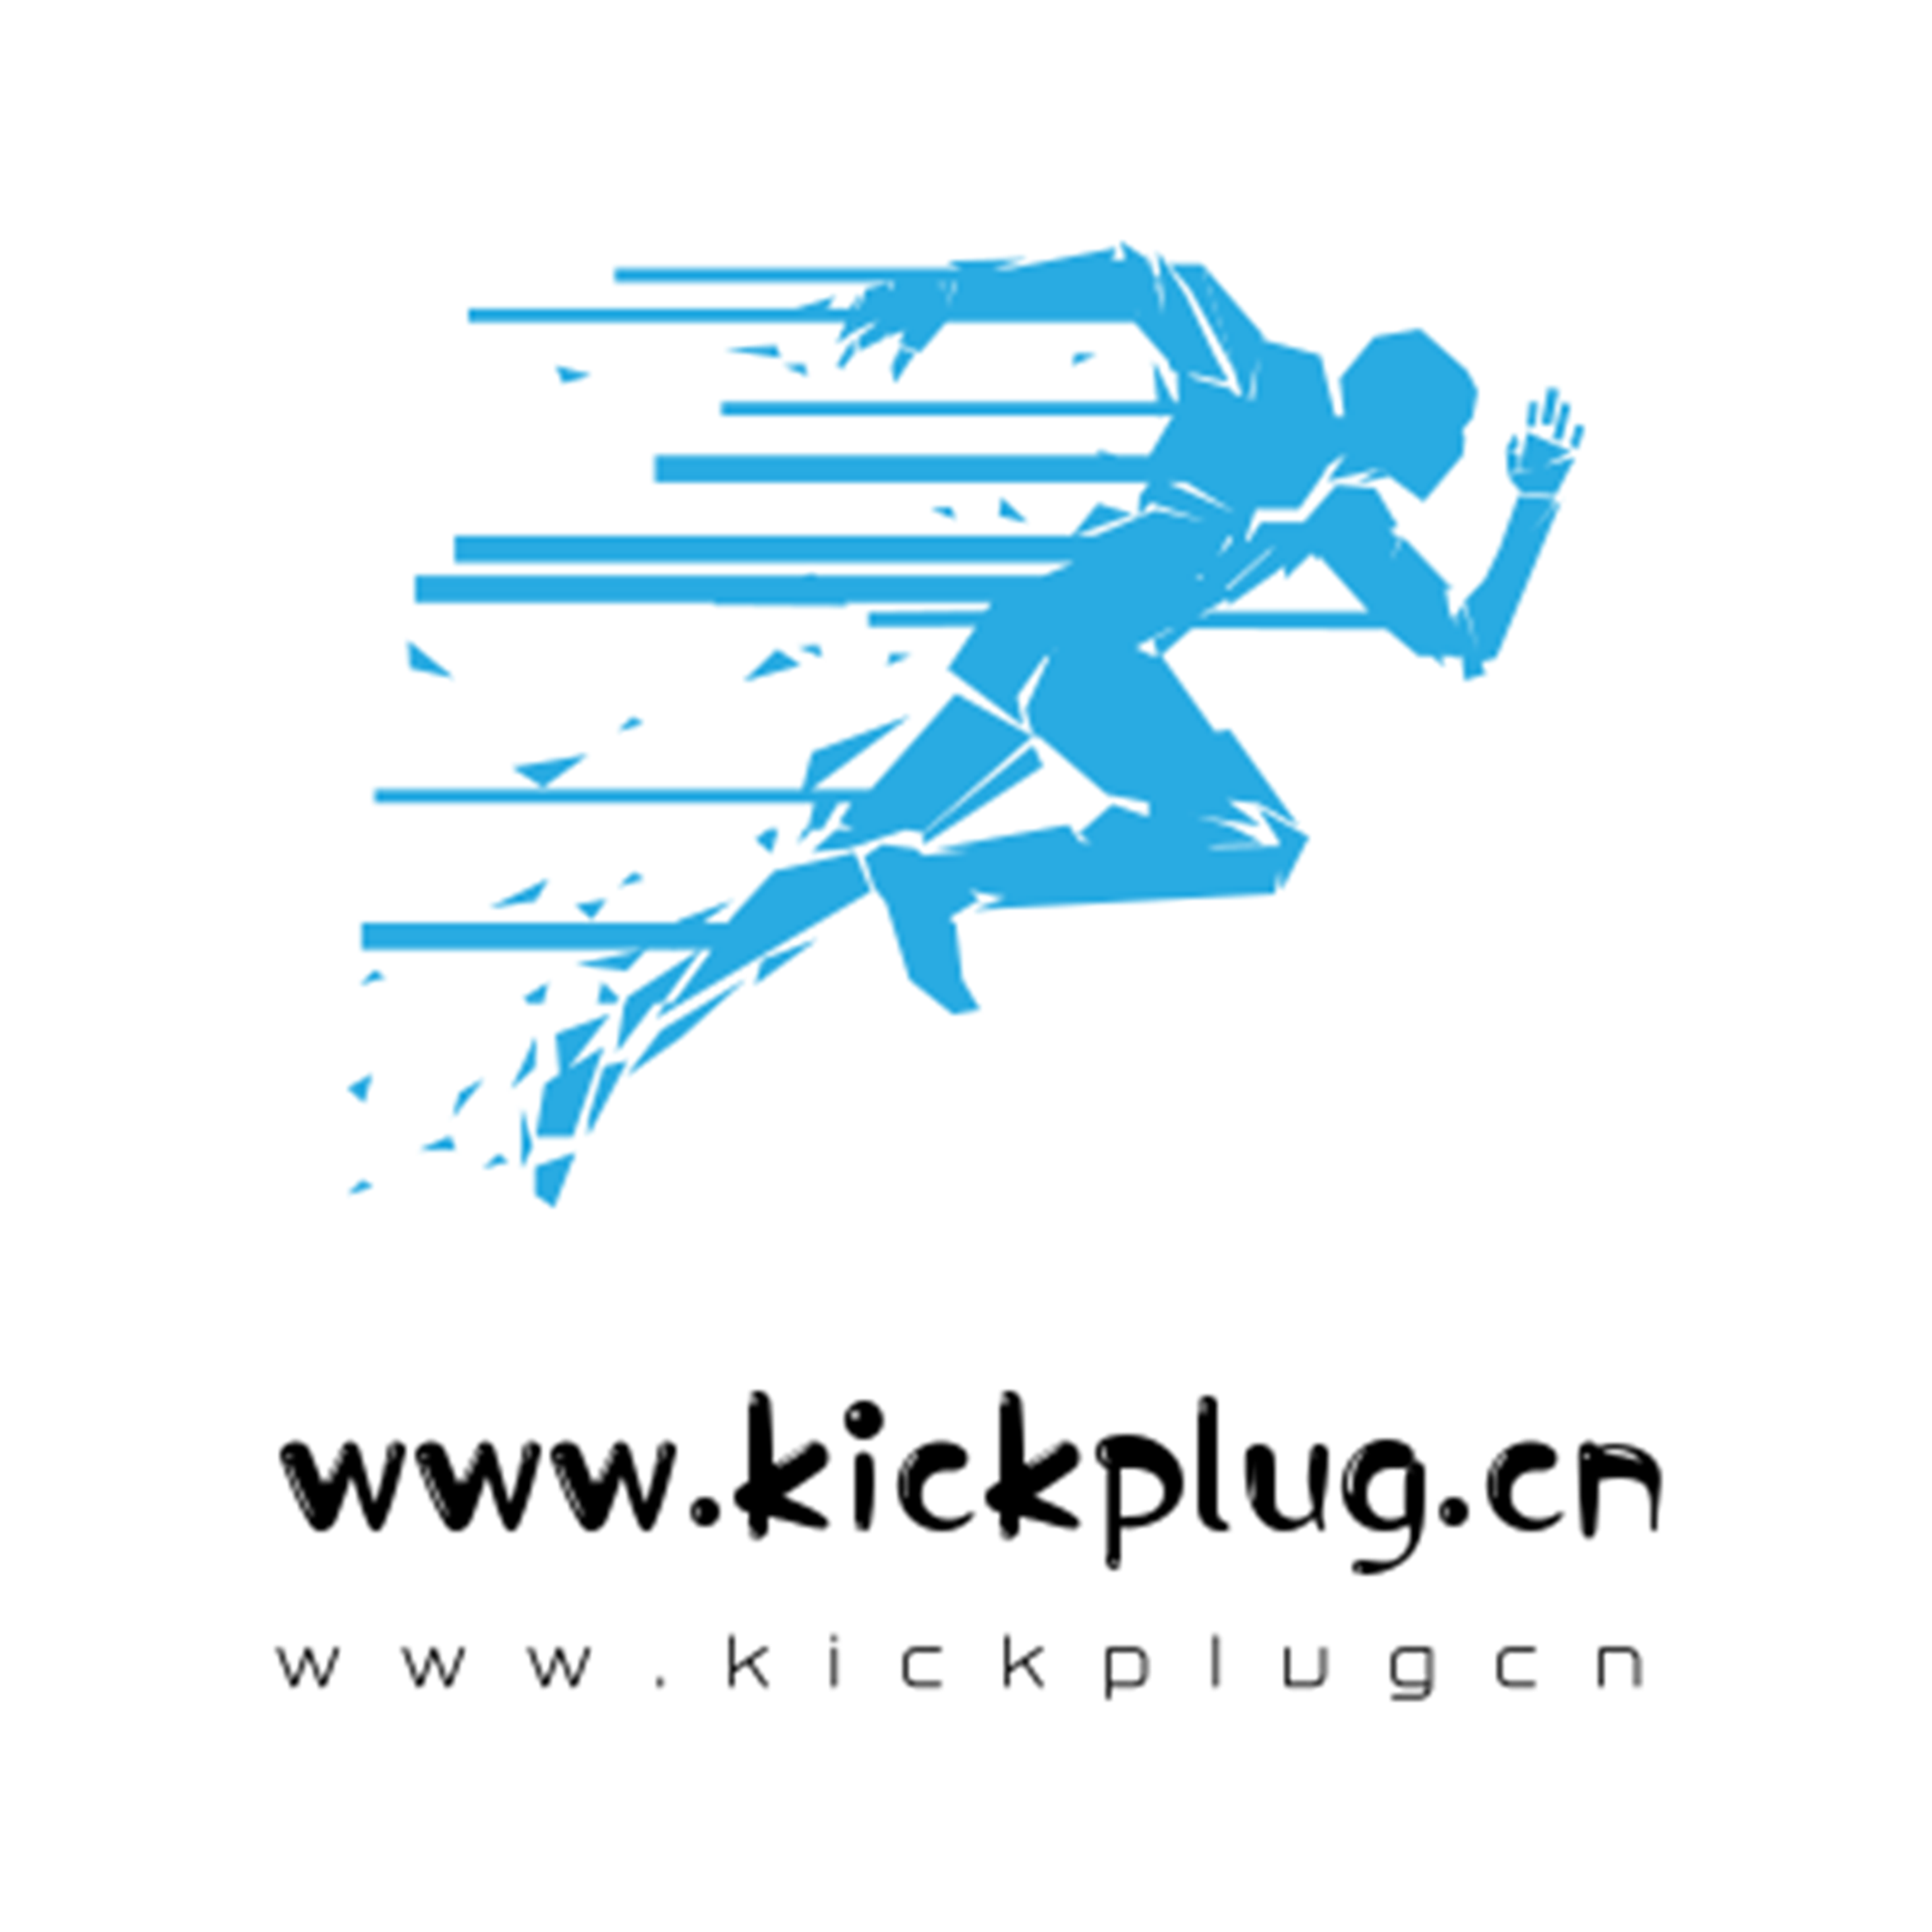 www.kickplug.cn